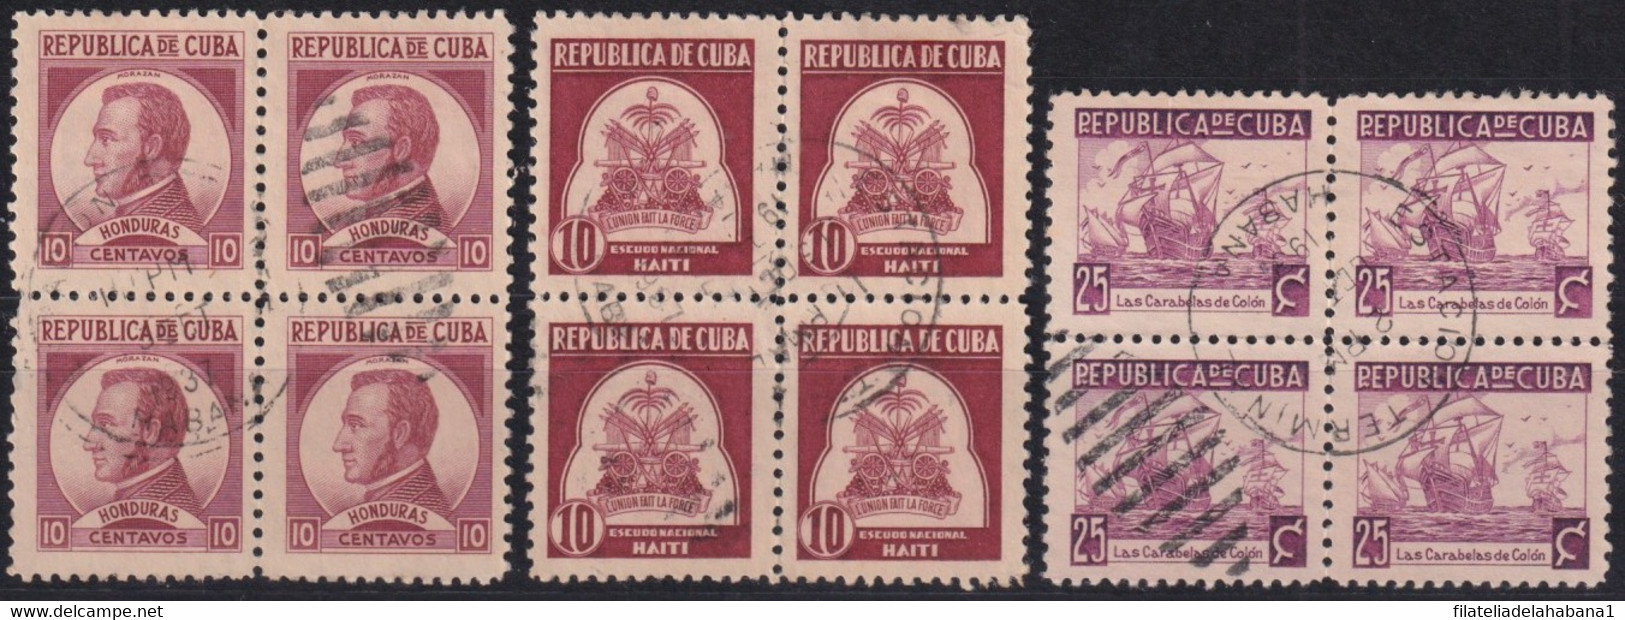 1937-442 CUBA REPUBLICA 1937 WRITTER & ARTIST CANCELLED BLOCK 4. - Usati